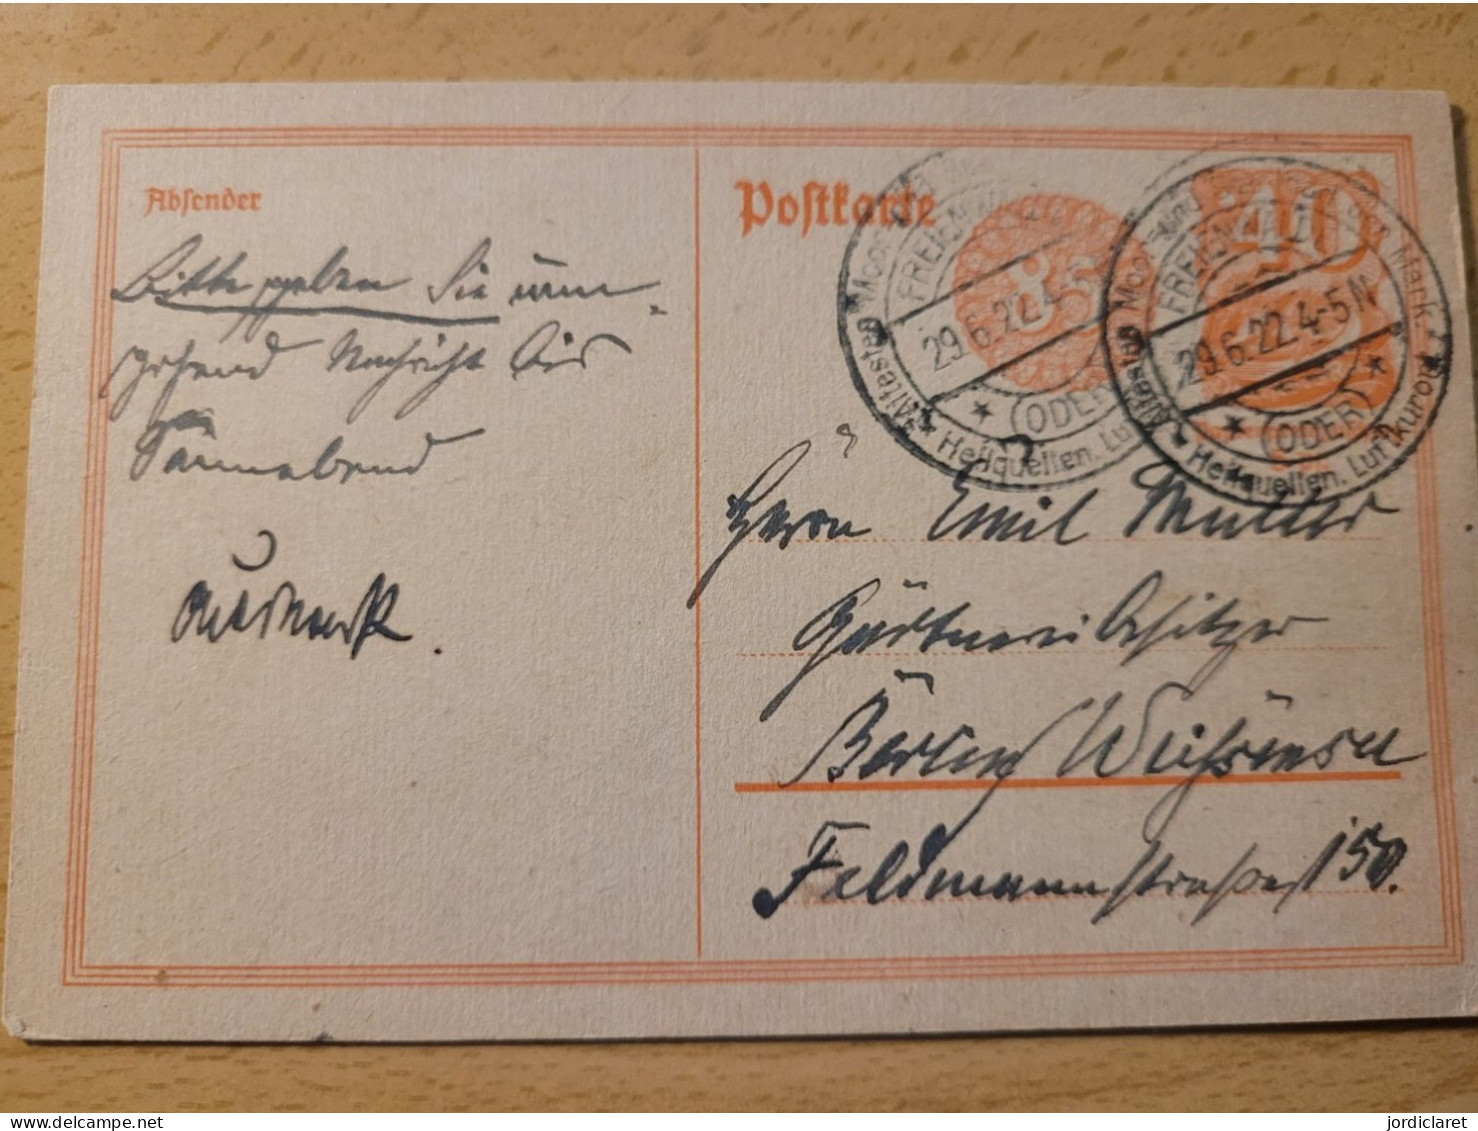 Postkarte 1922 - Cartes Postales